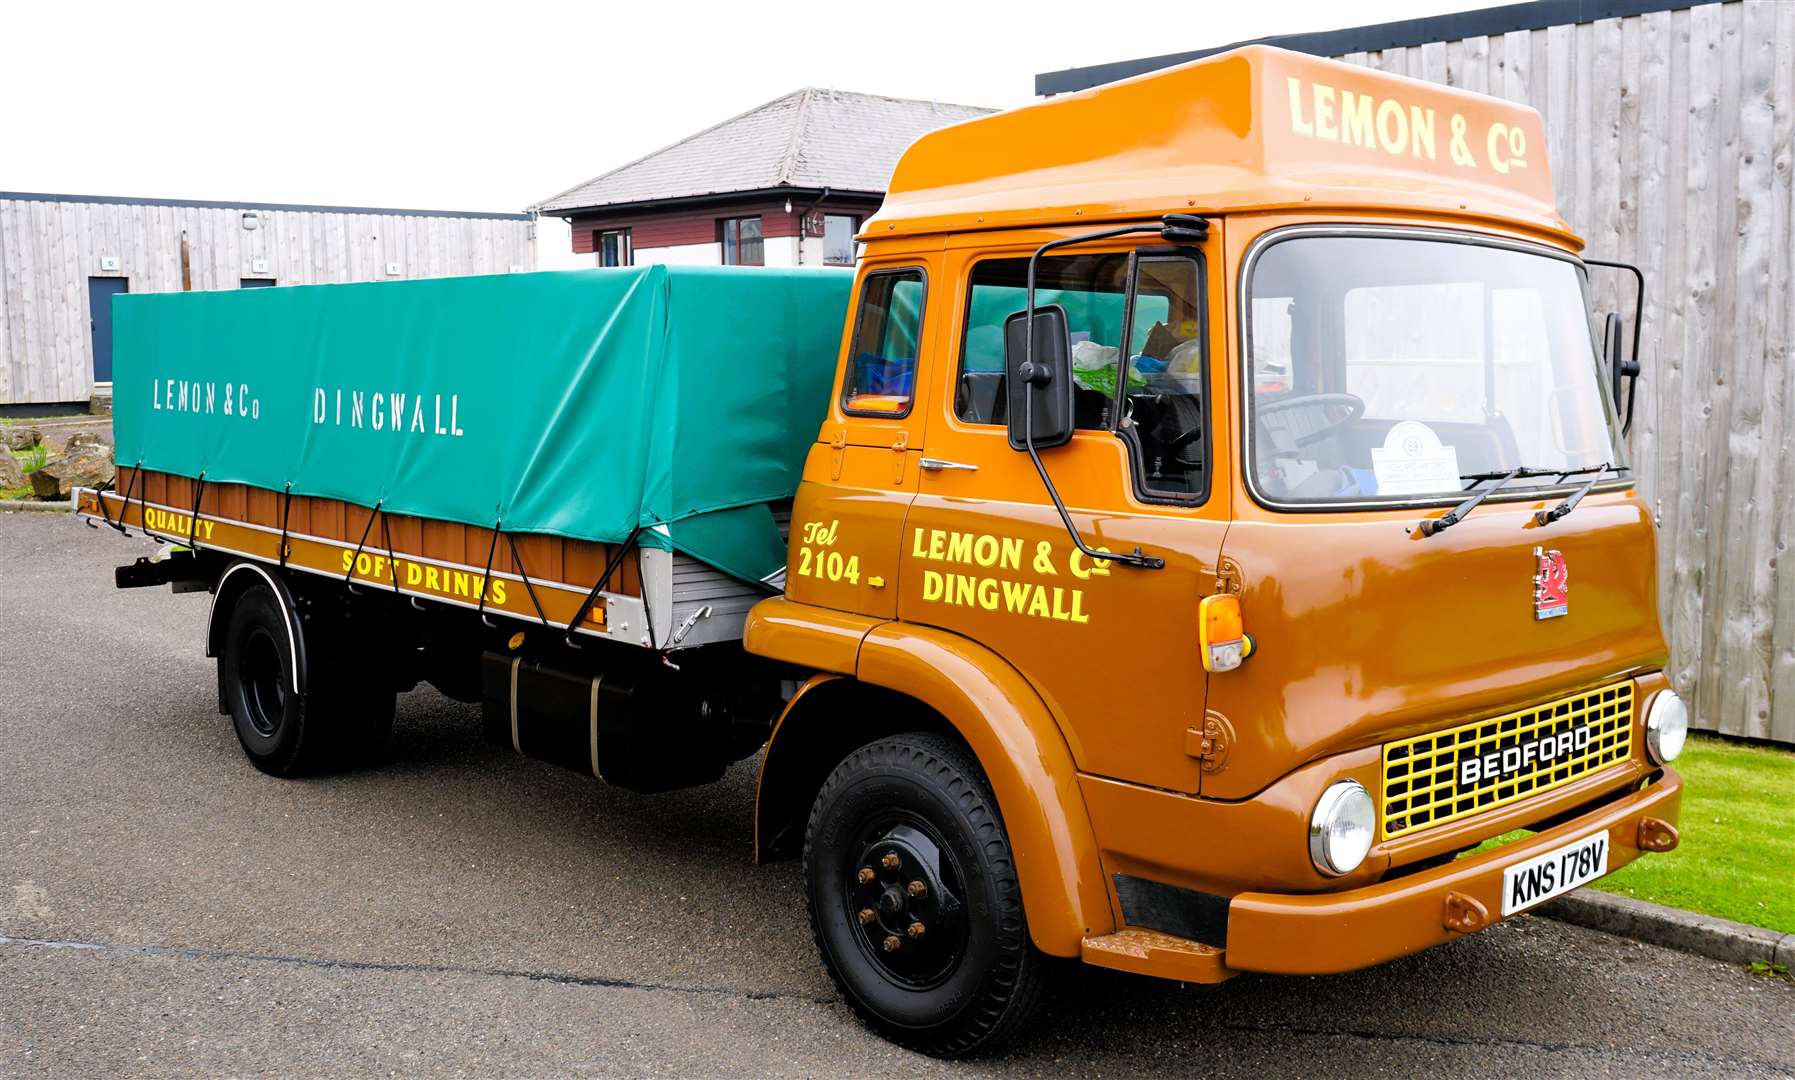 Lemon & Co lemonade lorry from Dingwall. Picture: DGS